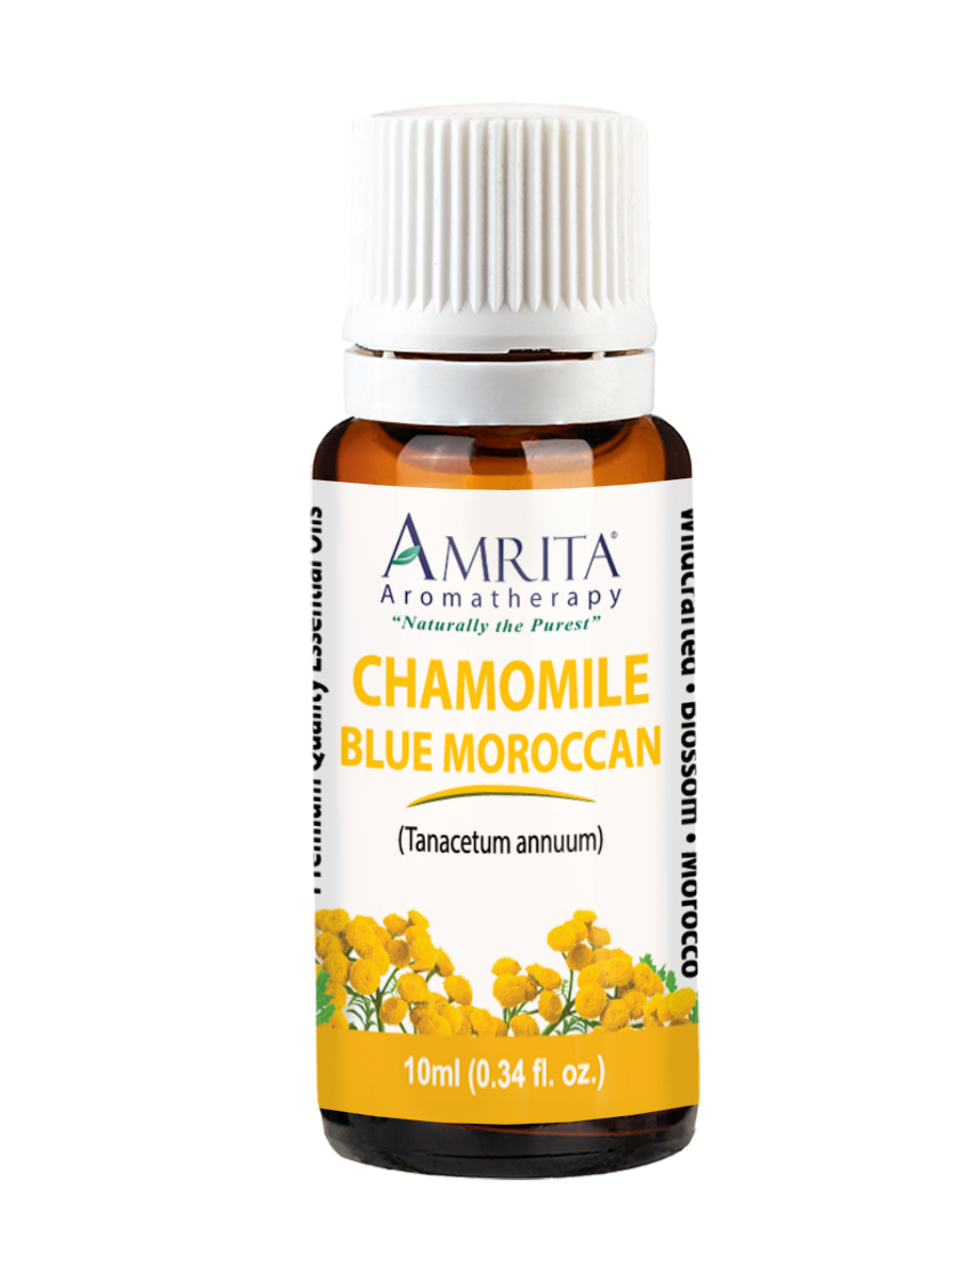 Chamomile (Roman) Essential Oil (Options: 5 ml)